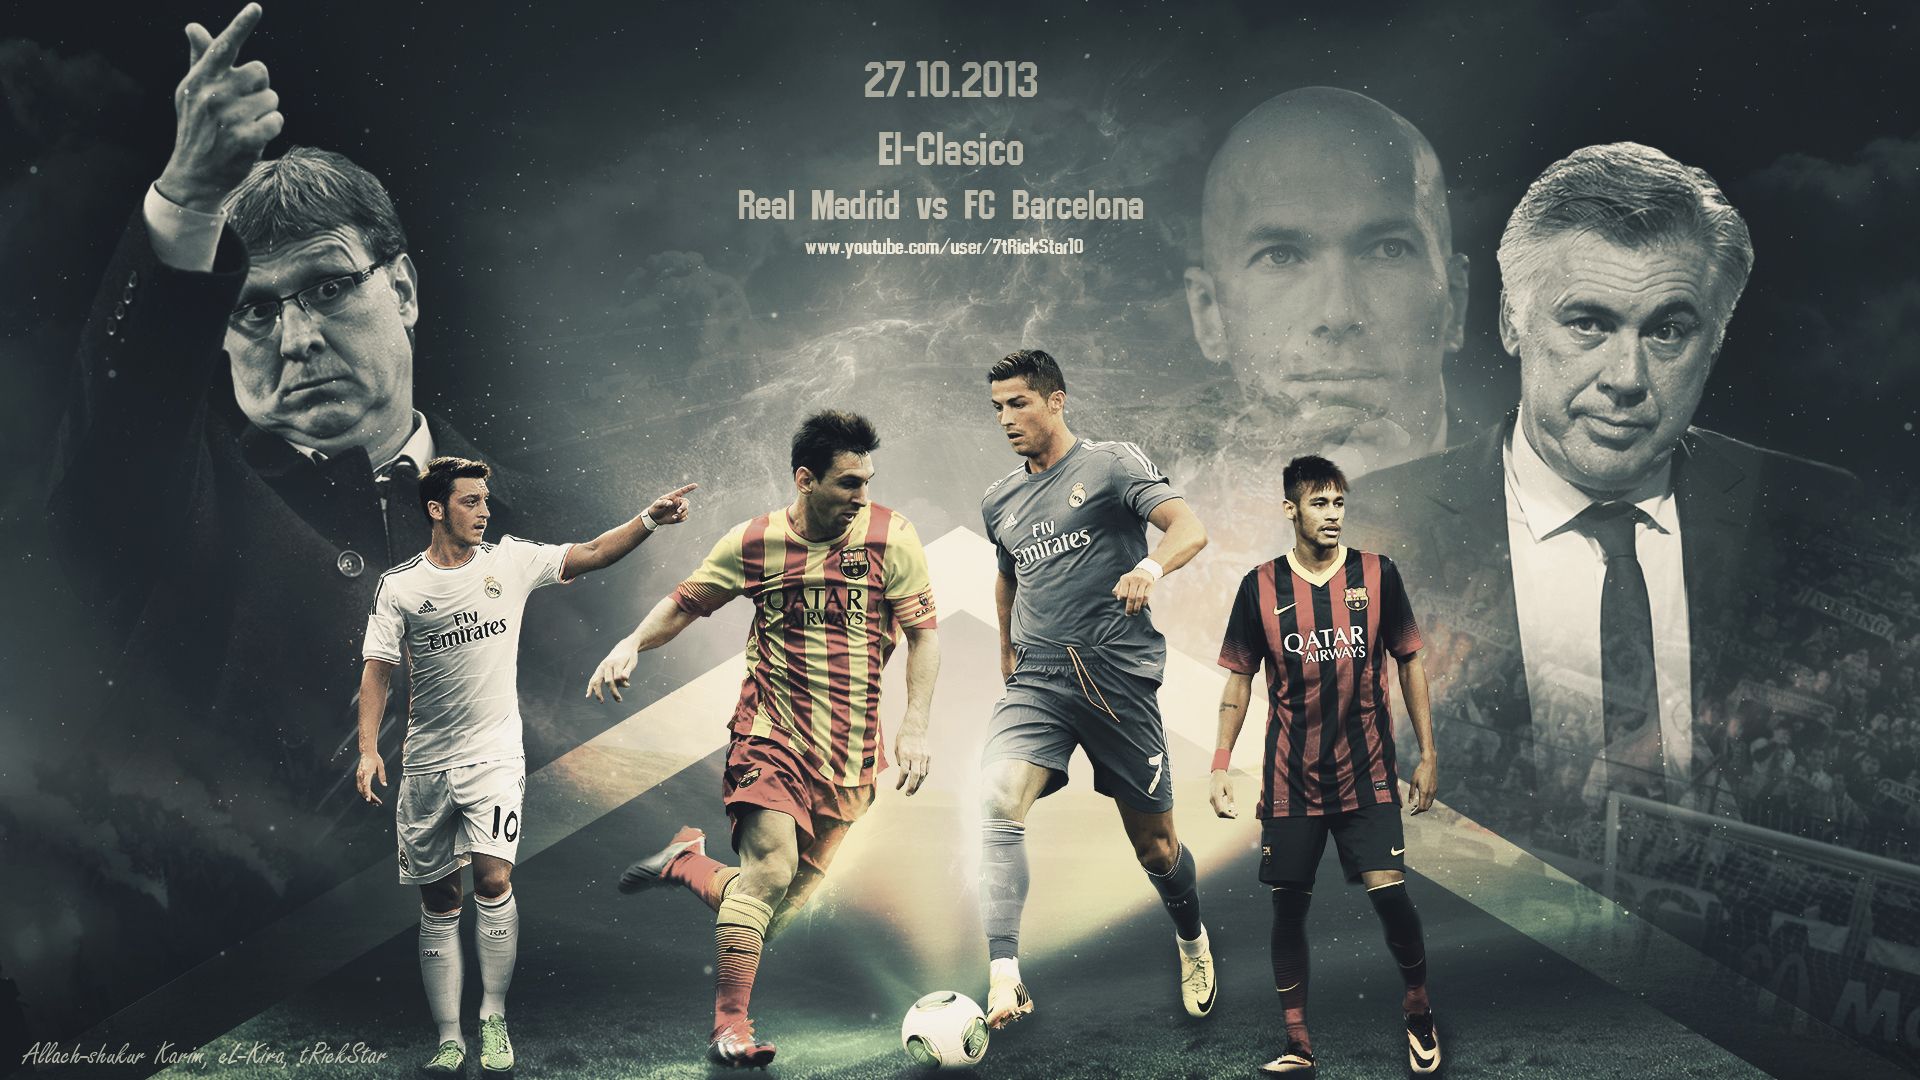 Real Madrid vs FC Barcelona | El-Clasico Wallpaper by eL-Kira on ...